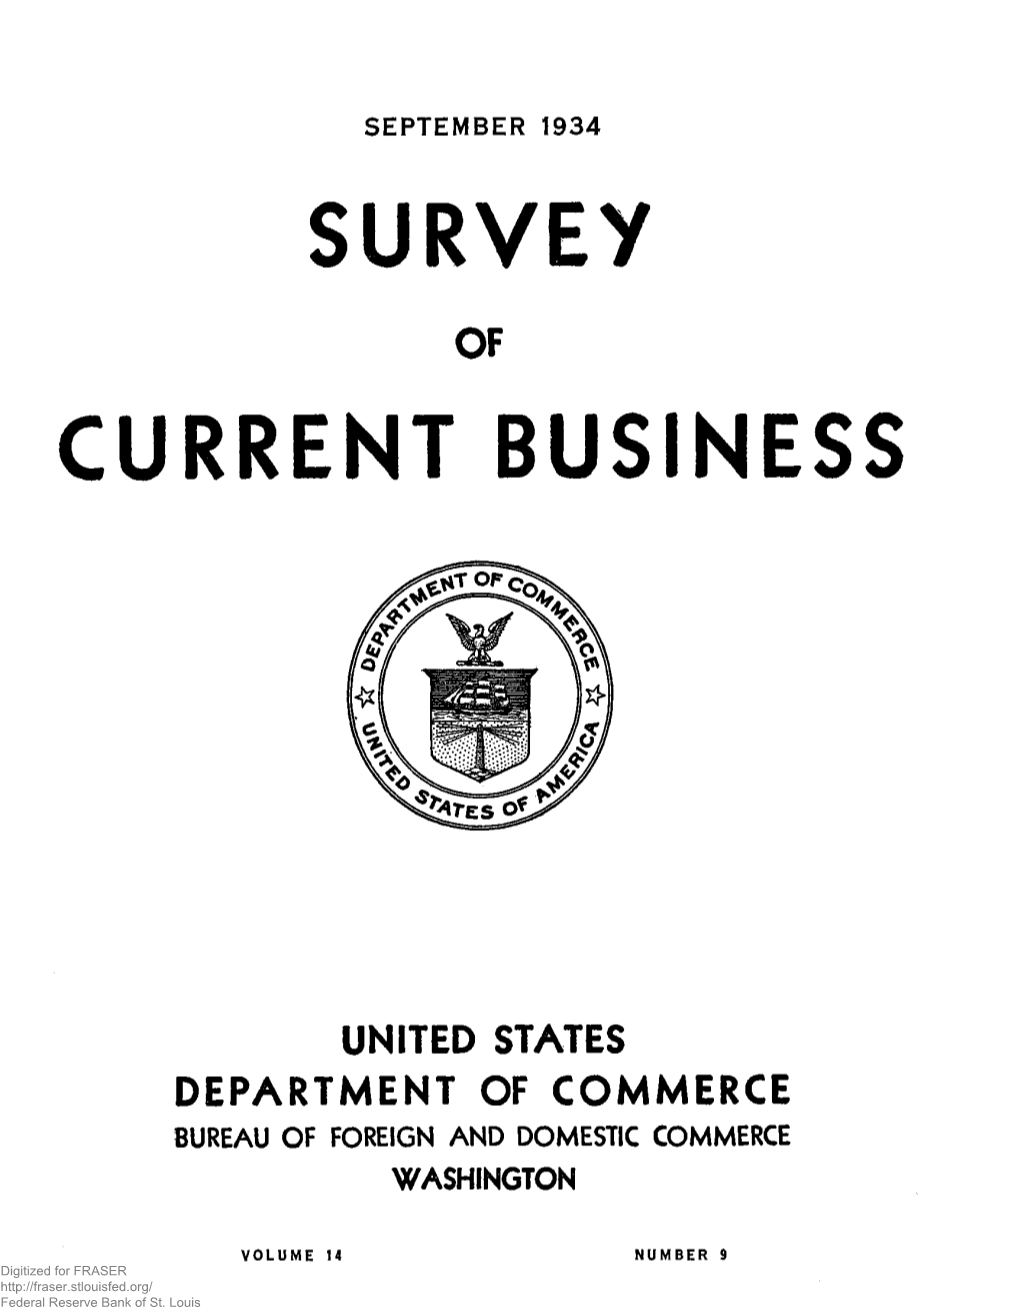 SURVEY of CURRENT BUSINESS September 1934